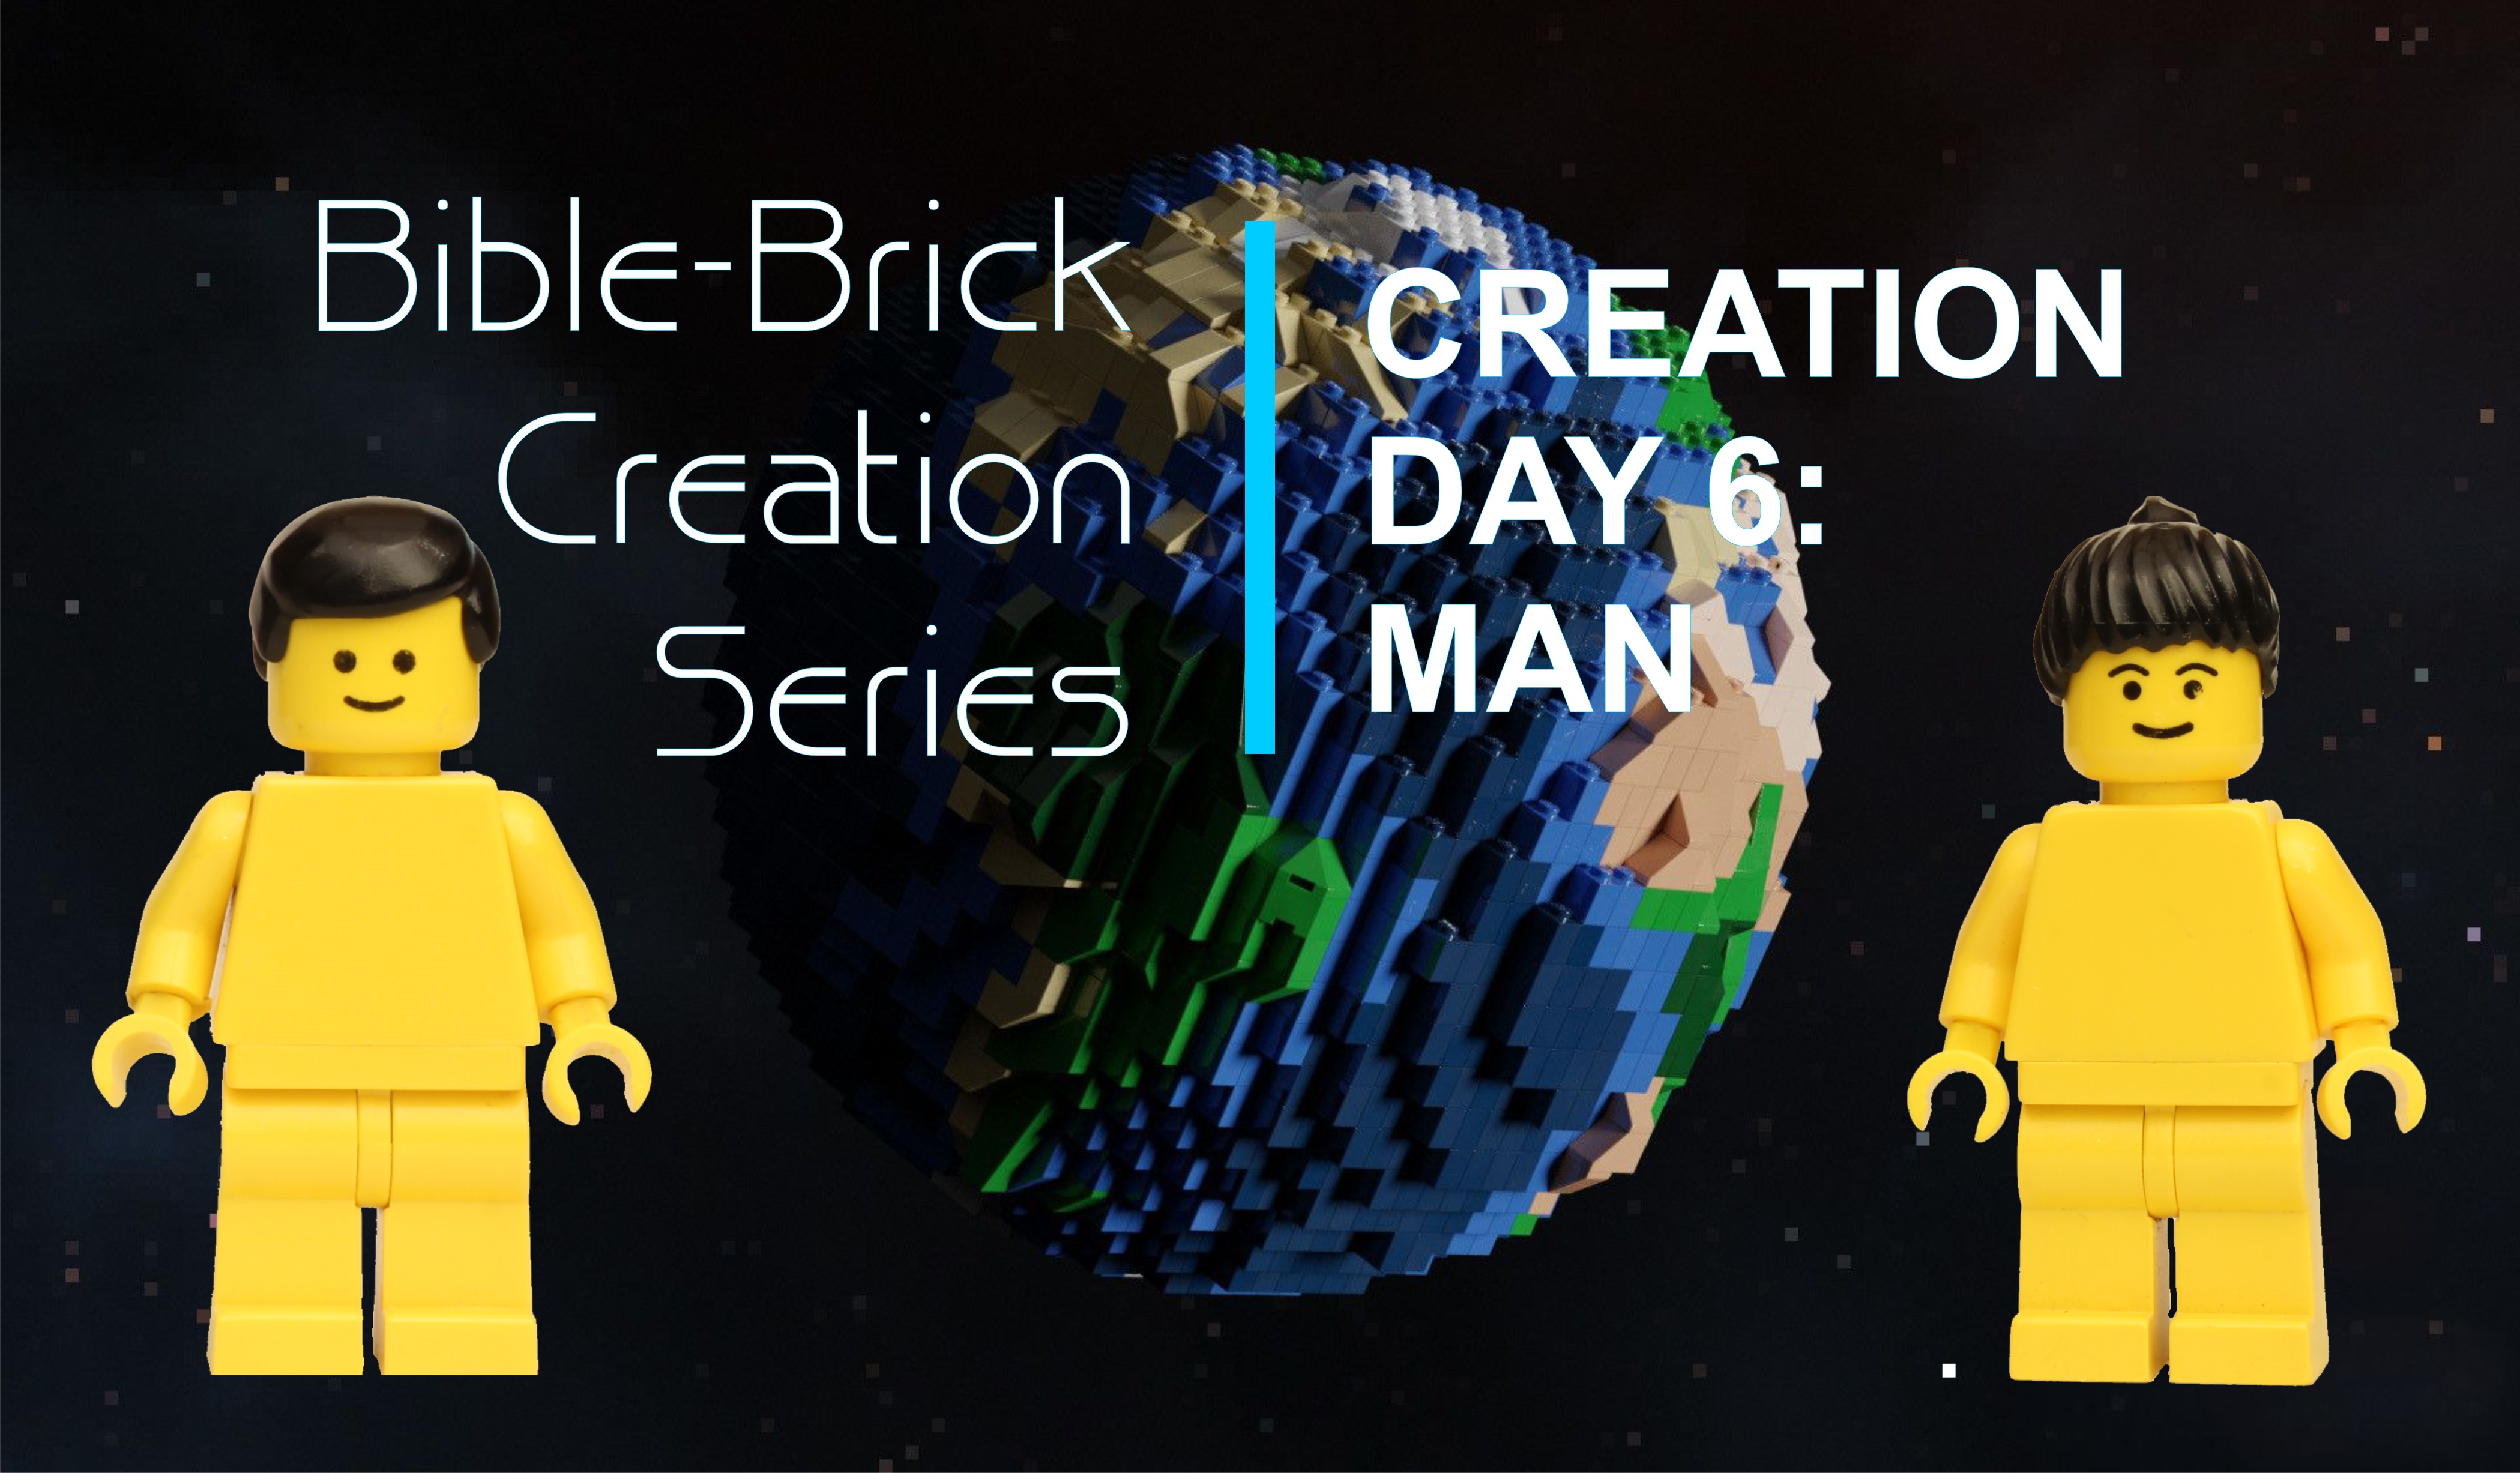 Creation #26 Day 6 Man